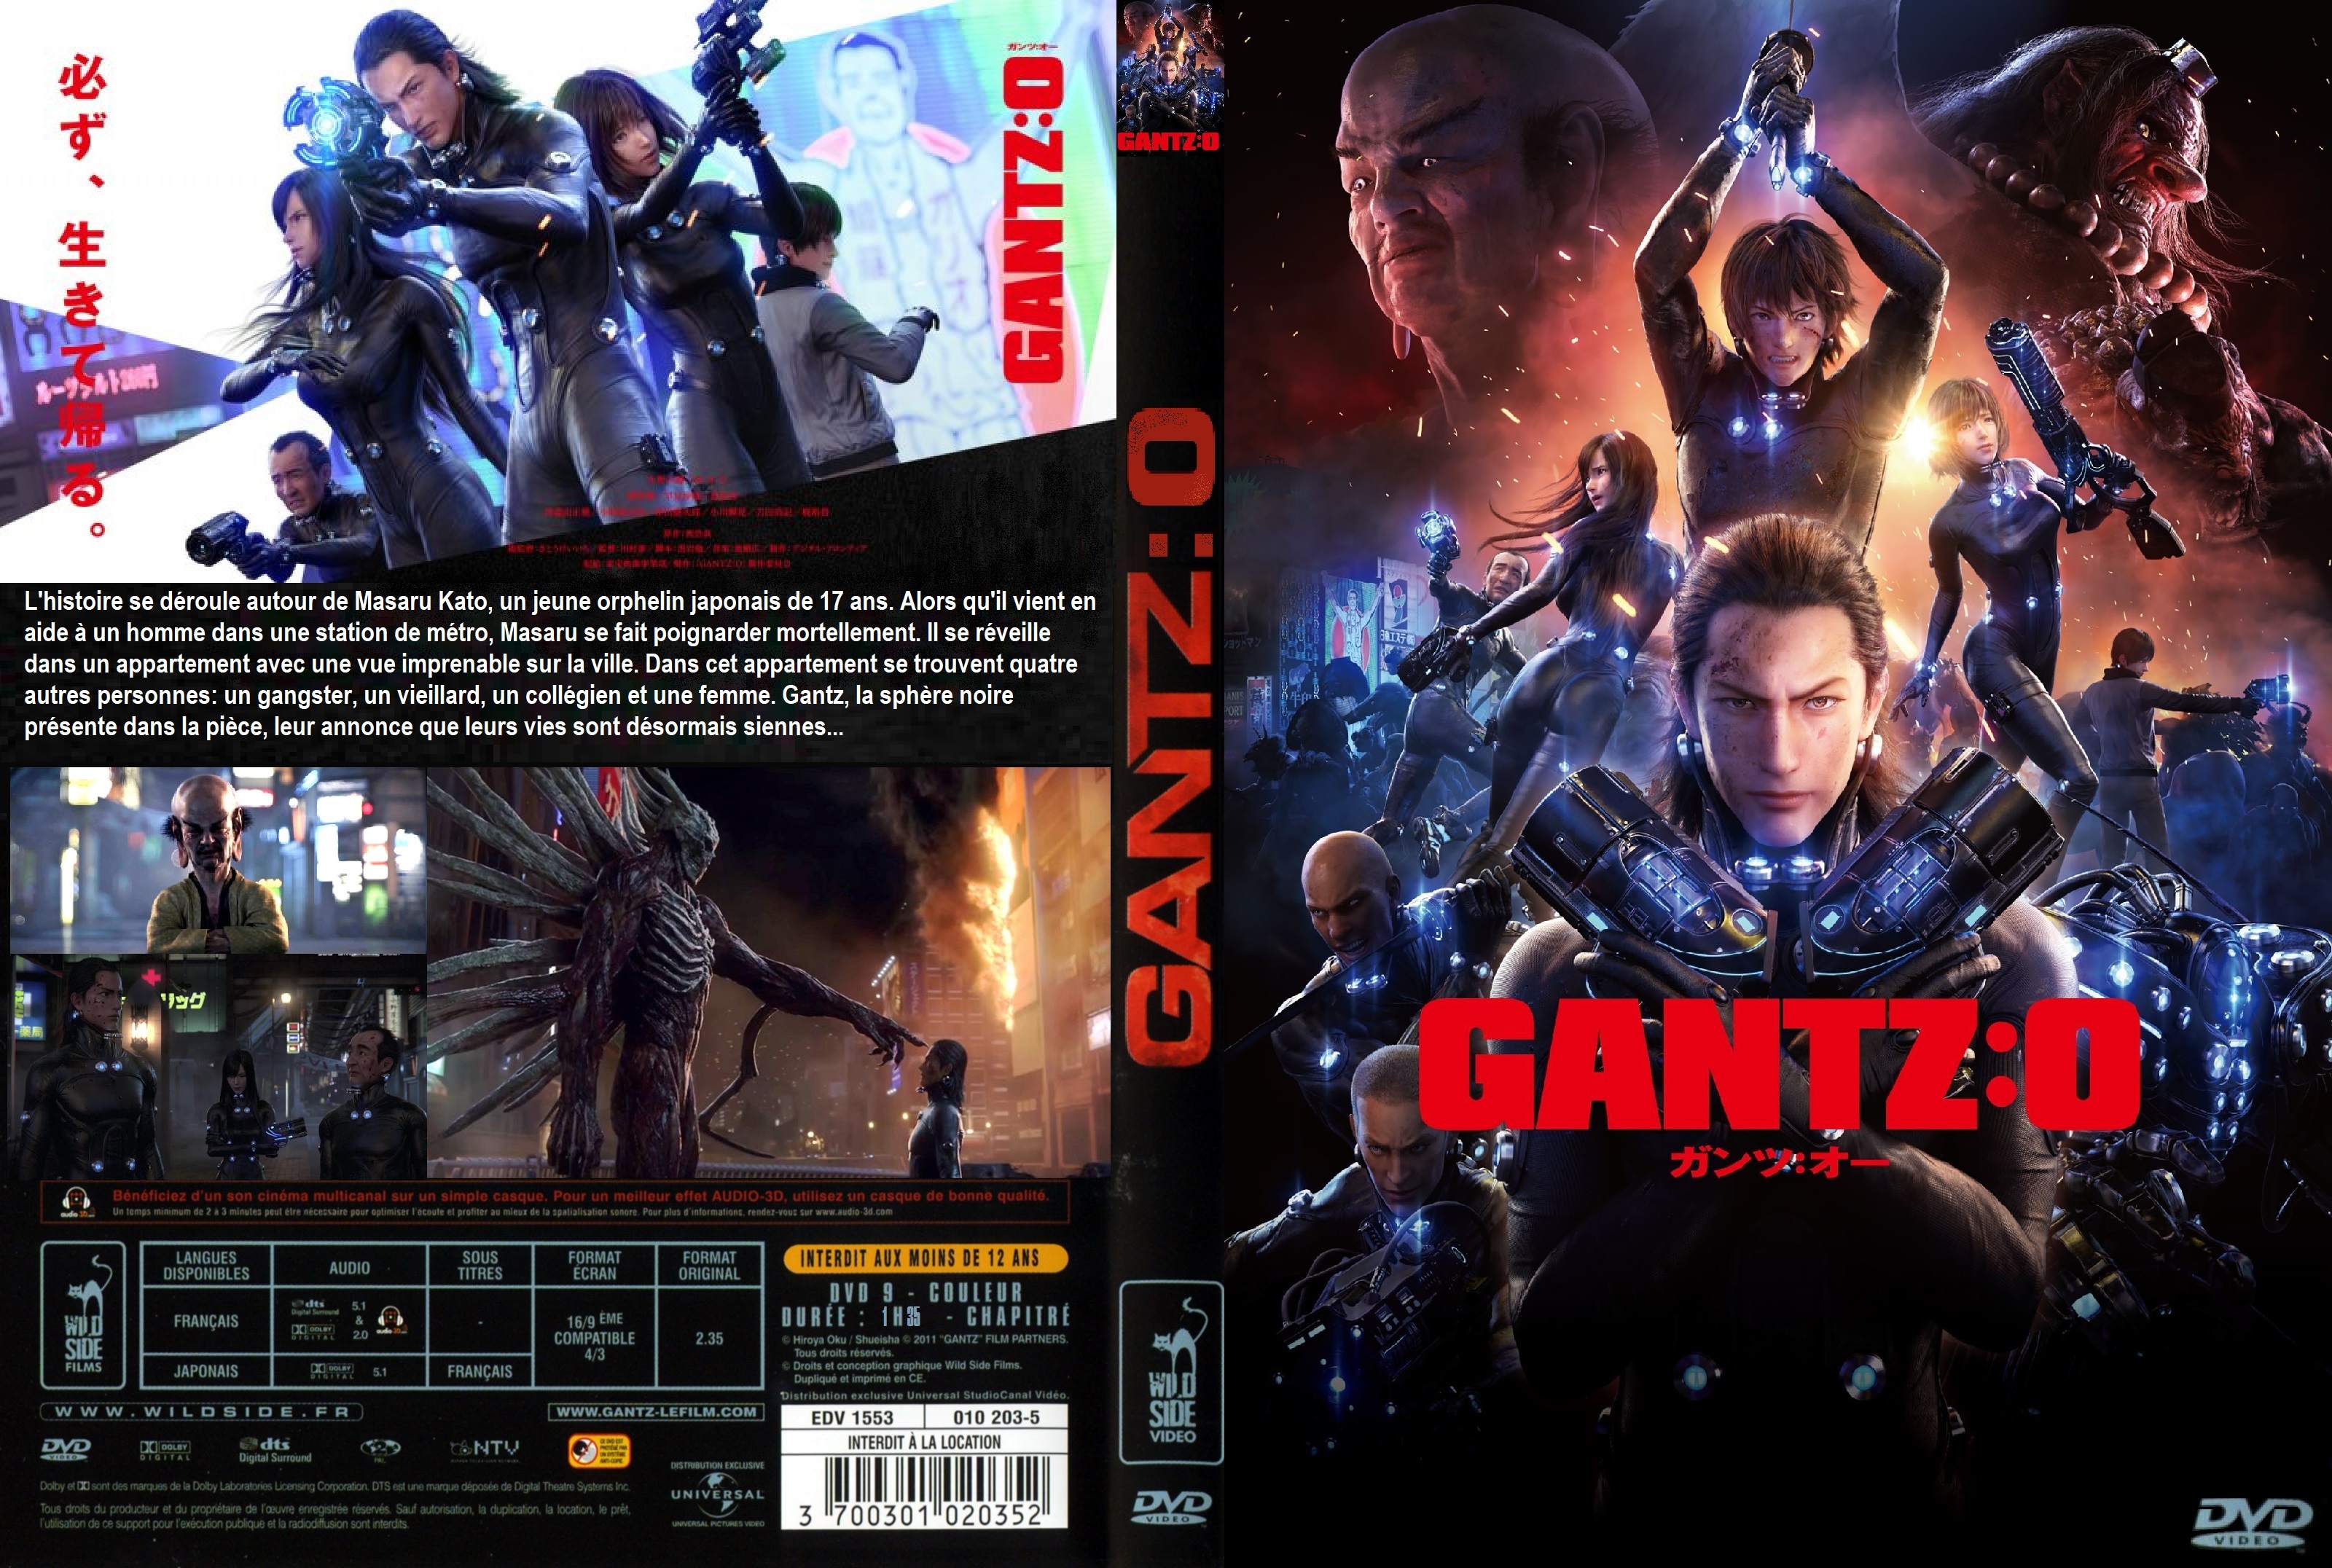 Jaquette DVD Gantz 0 custom